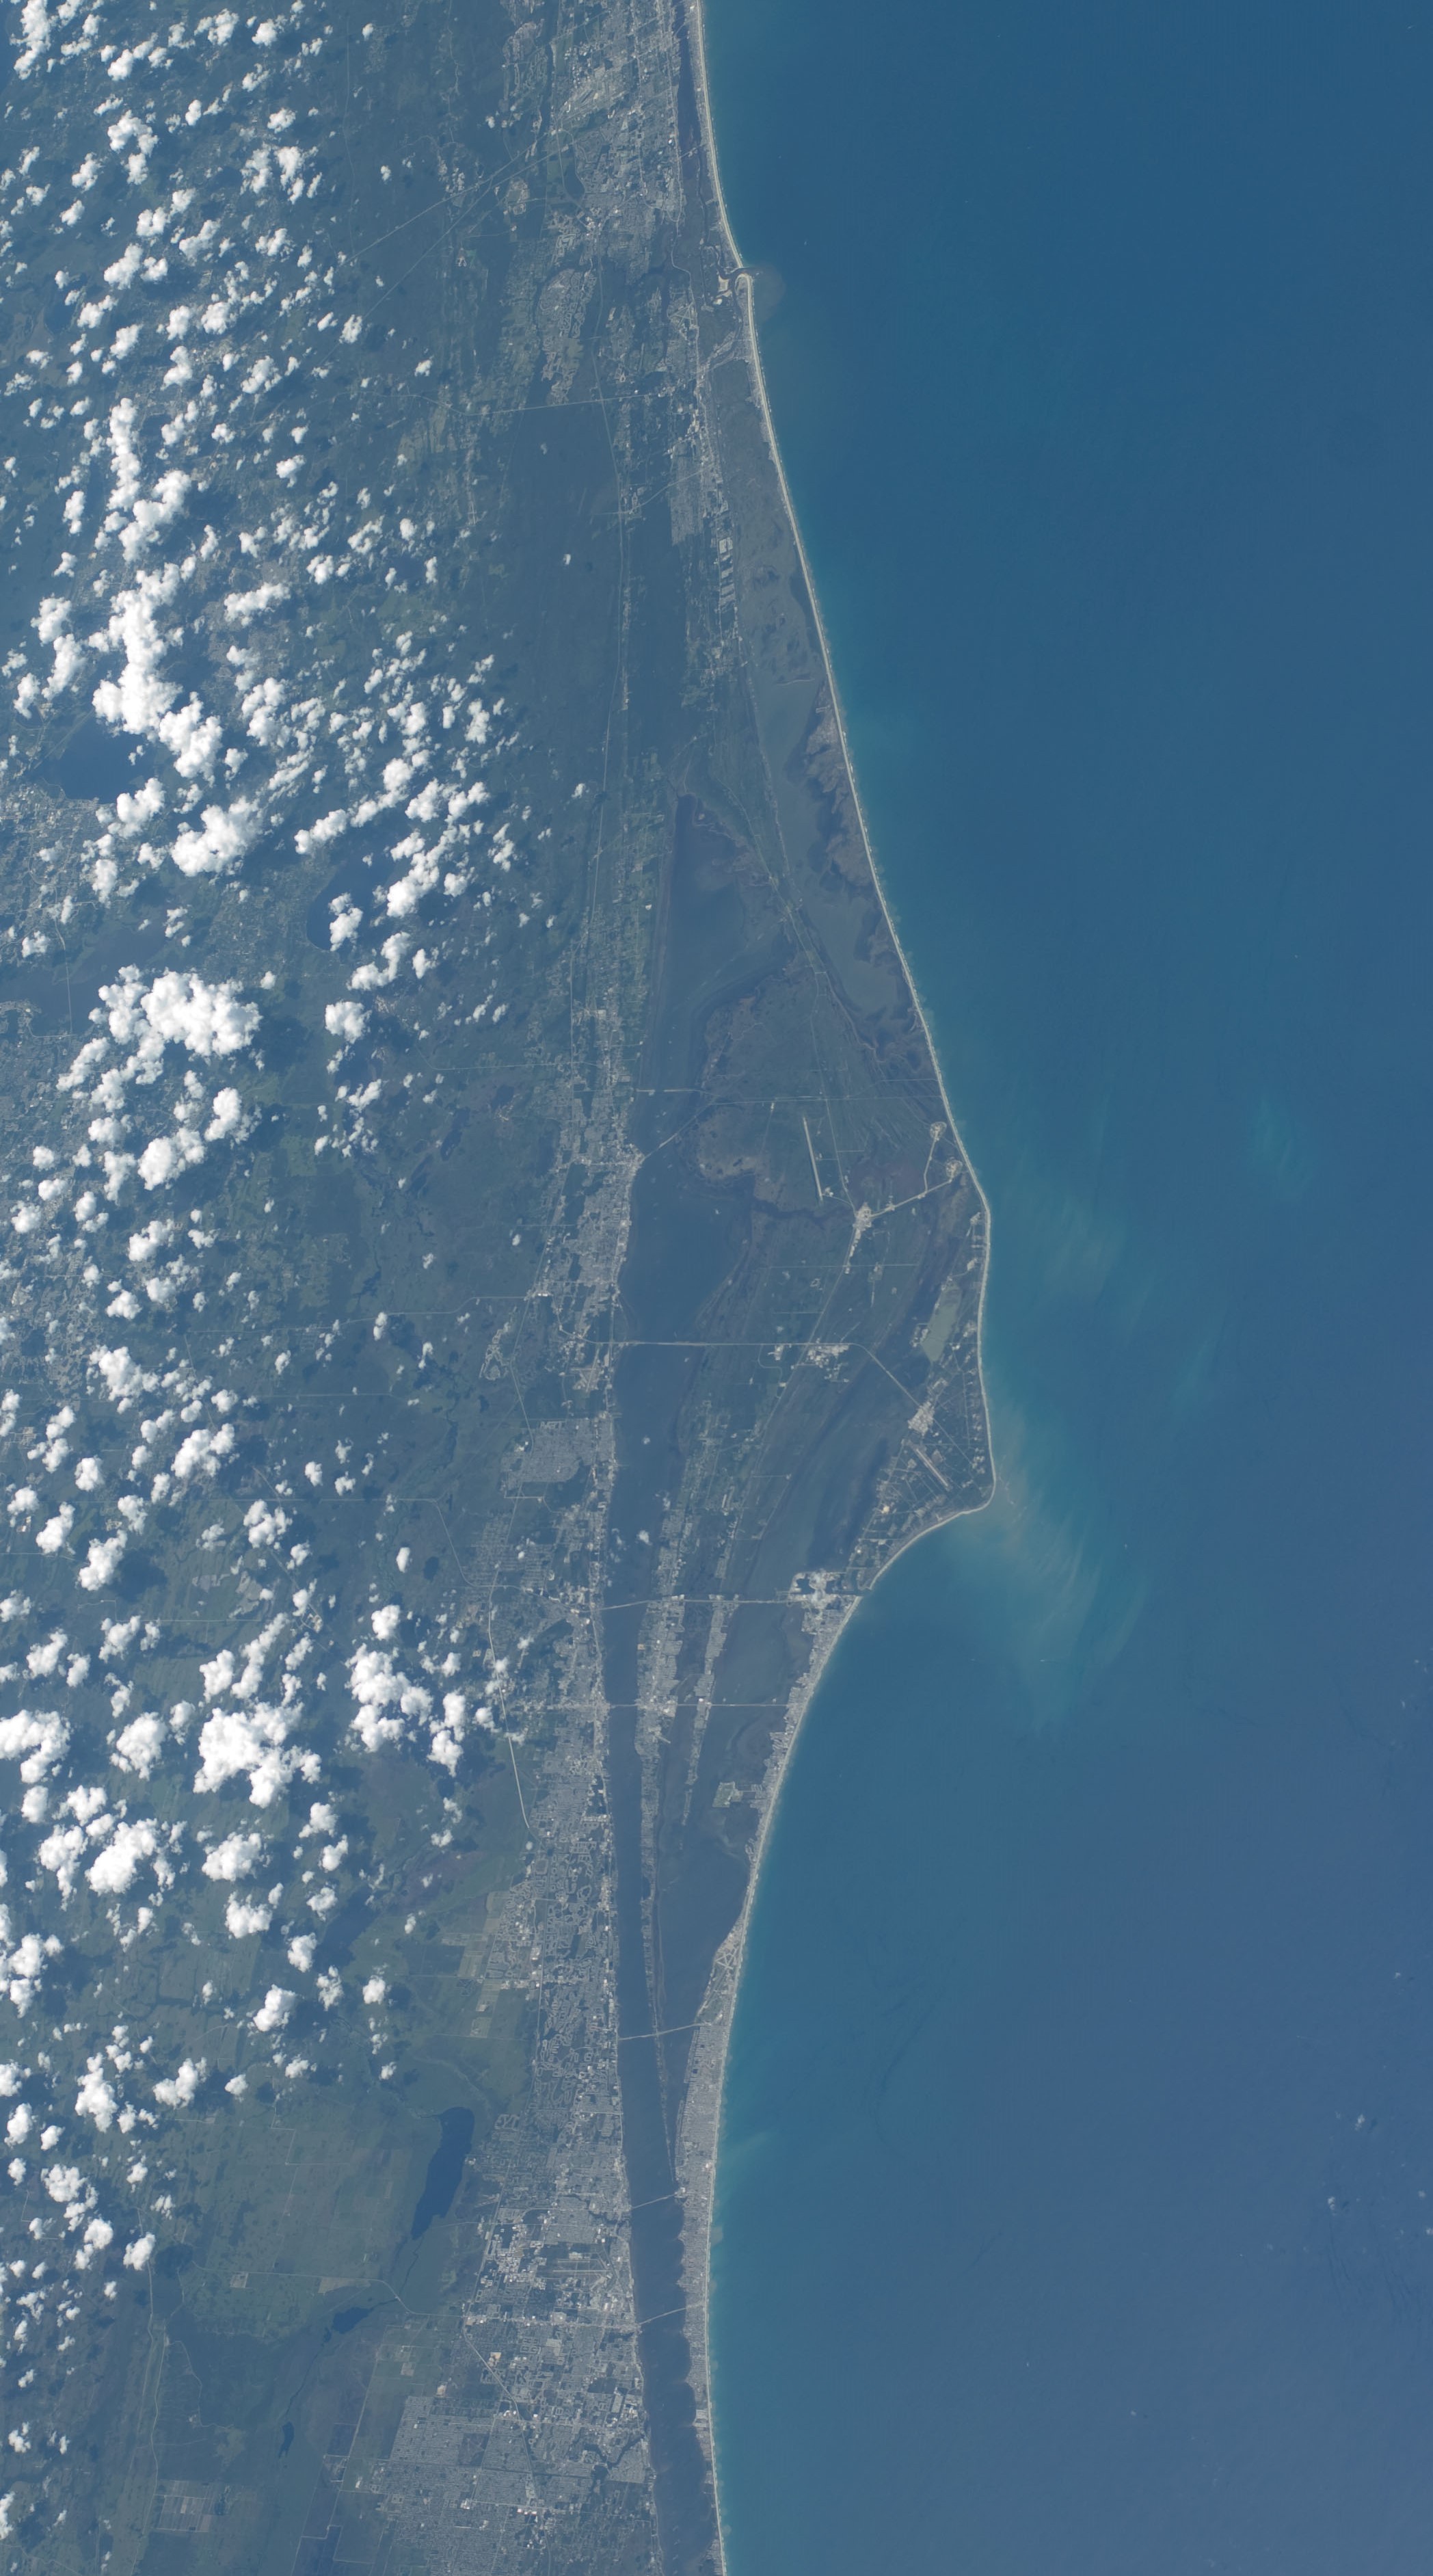 The central Florida coast including NASA's Kennedy Space Center